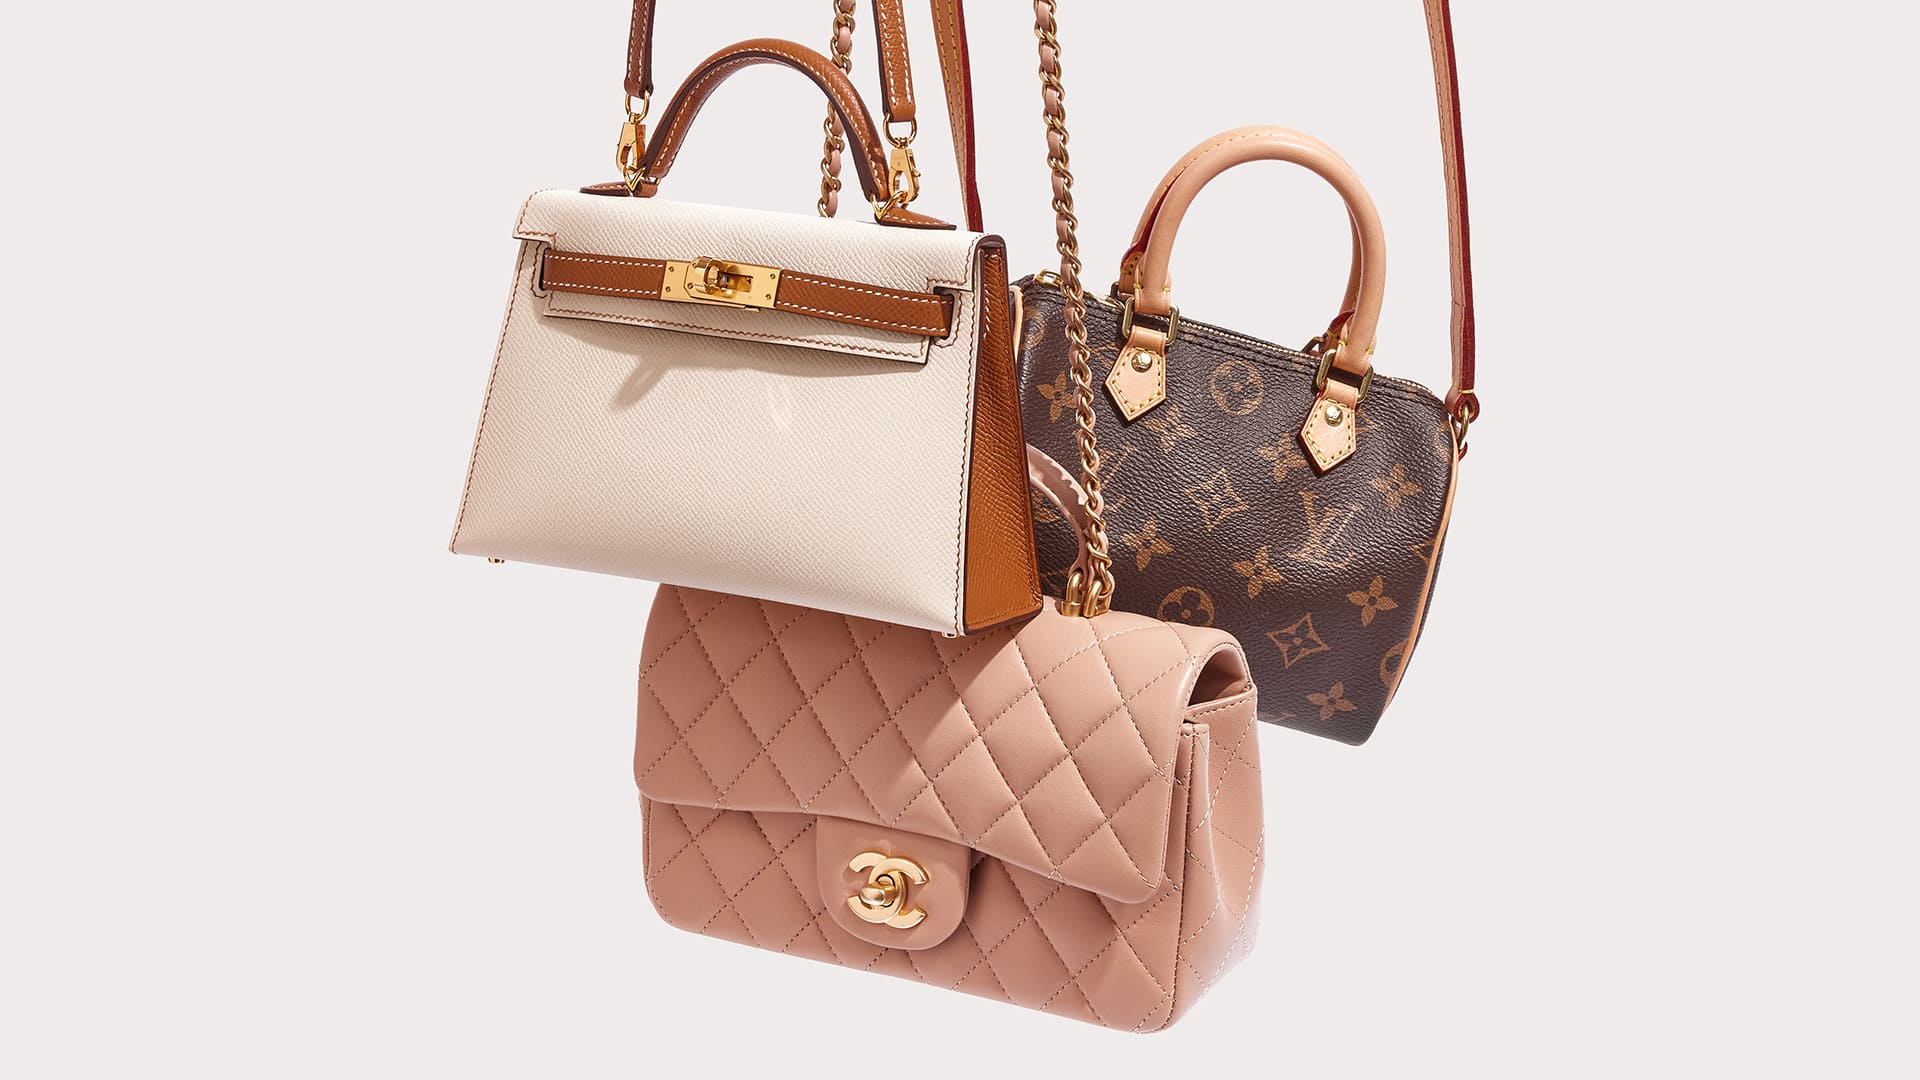 Are designer handbags worth the money?